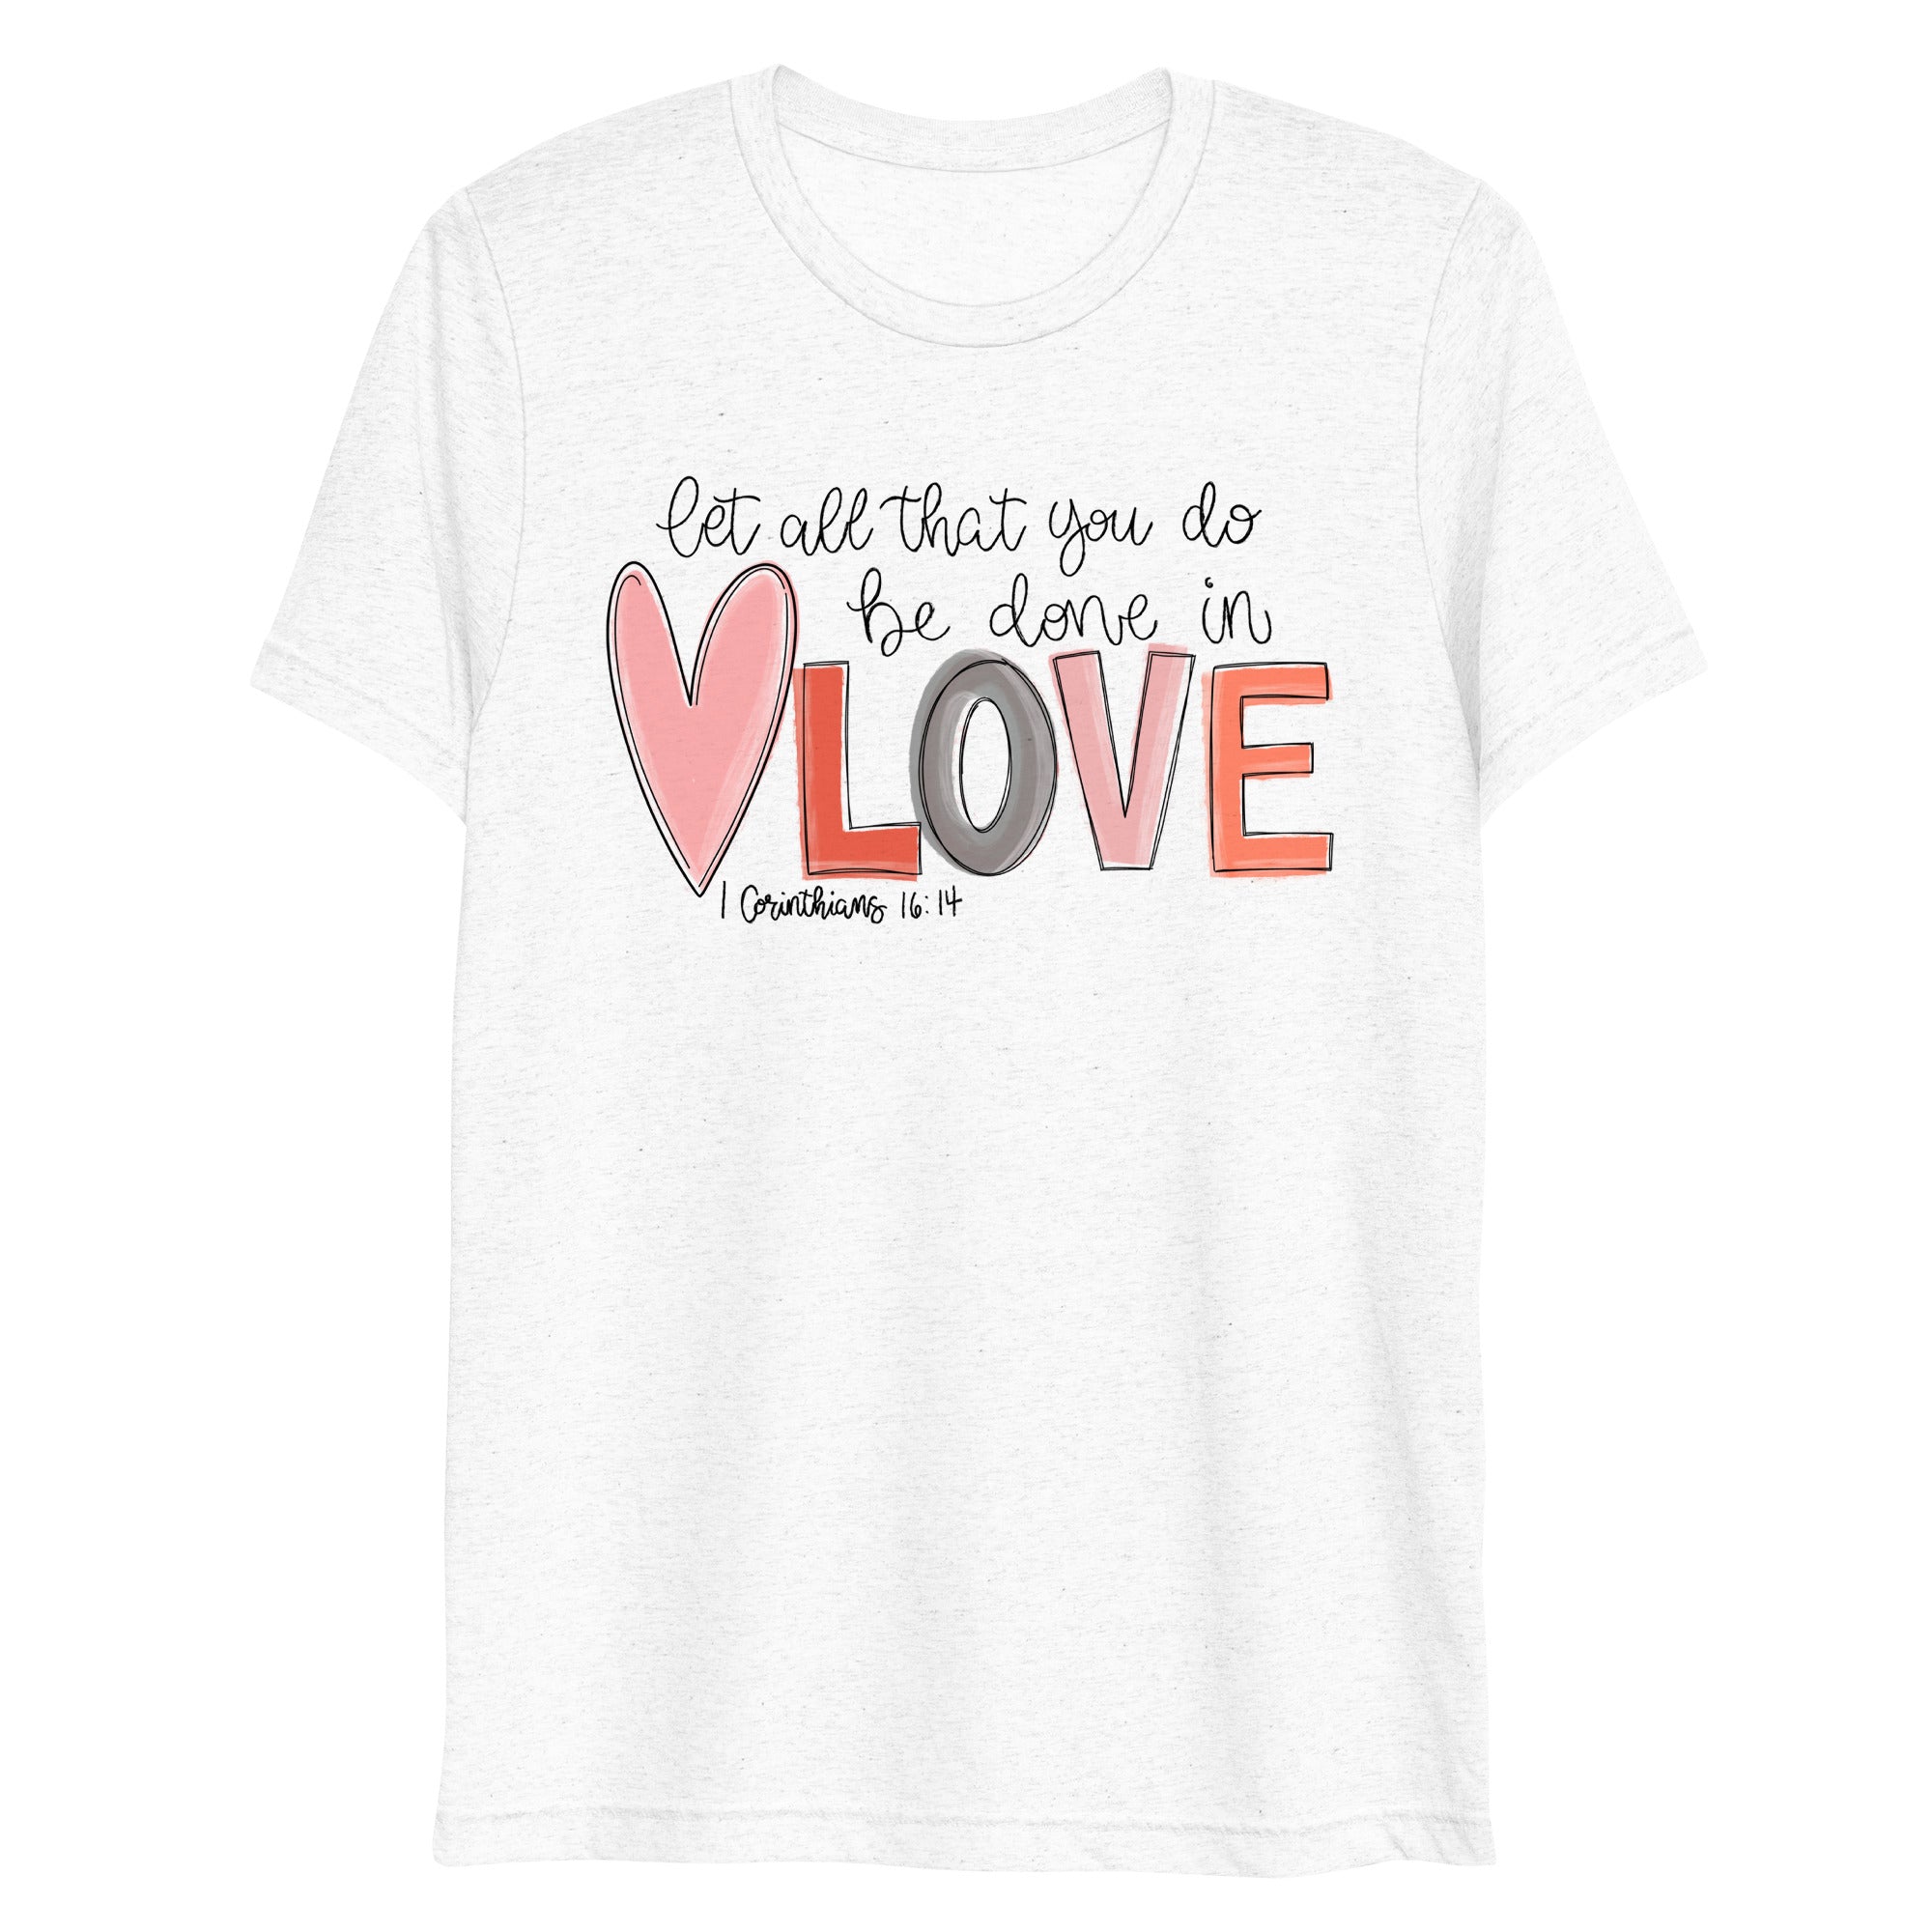 Love - 1 Corinthians 16:14 - Women's Tri-Blend T-Shirt